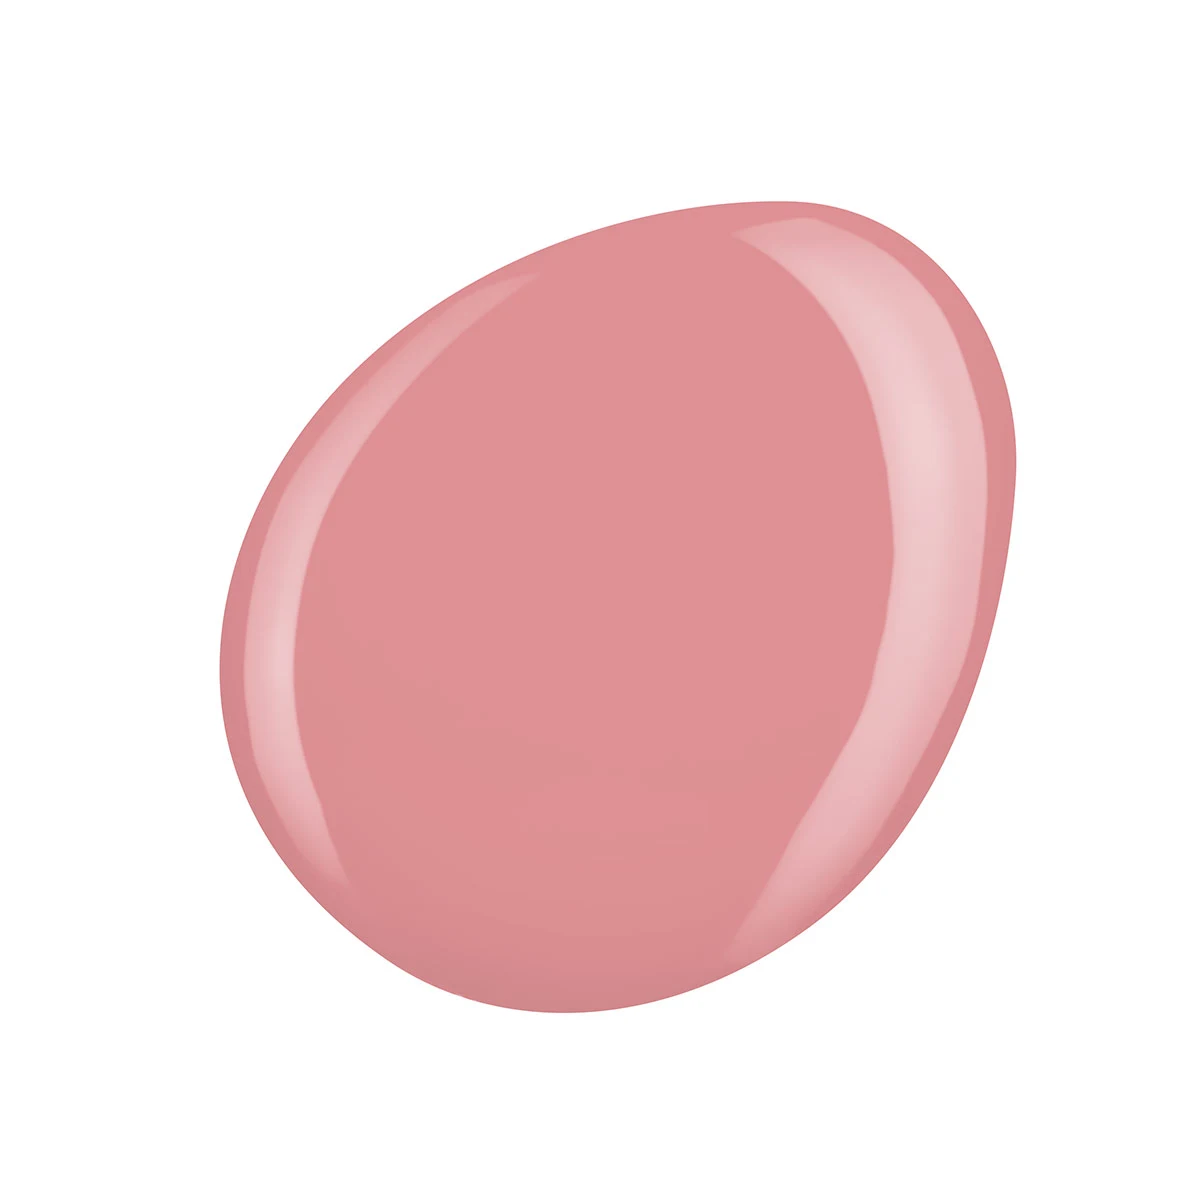 KINETICS Gel lak - SHIELD (HEMA FREE) - Swirl of Rosé #566 - 15 ml